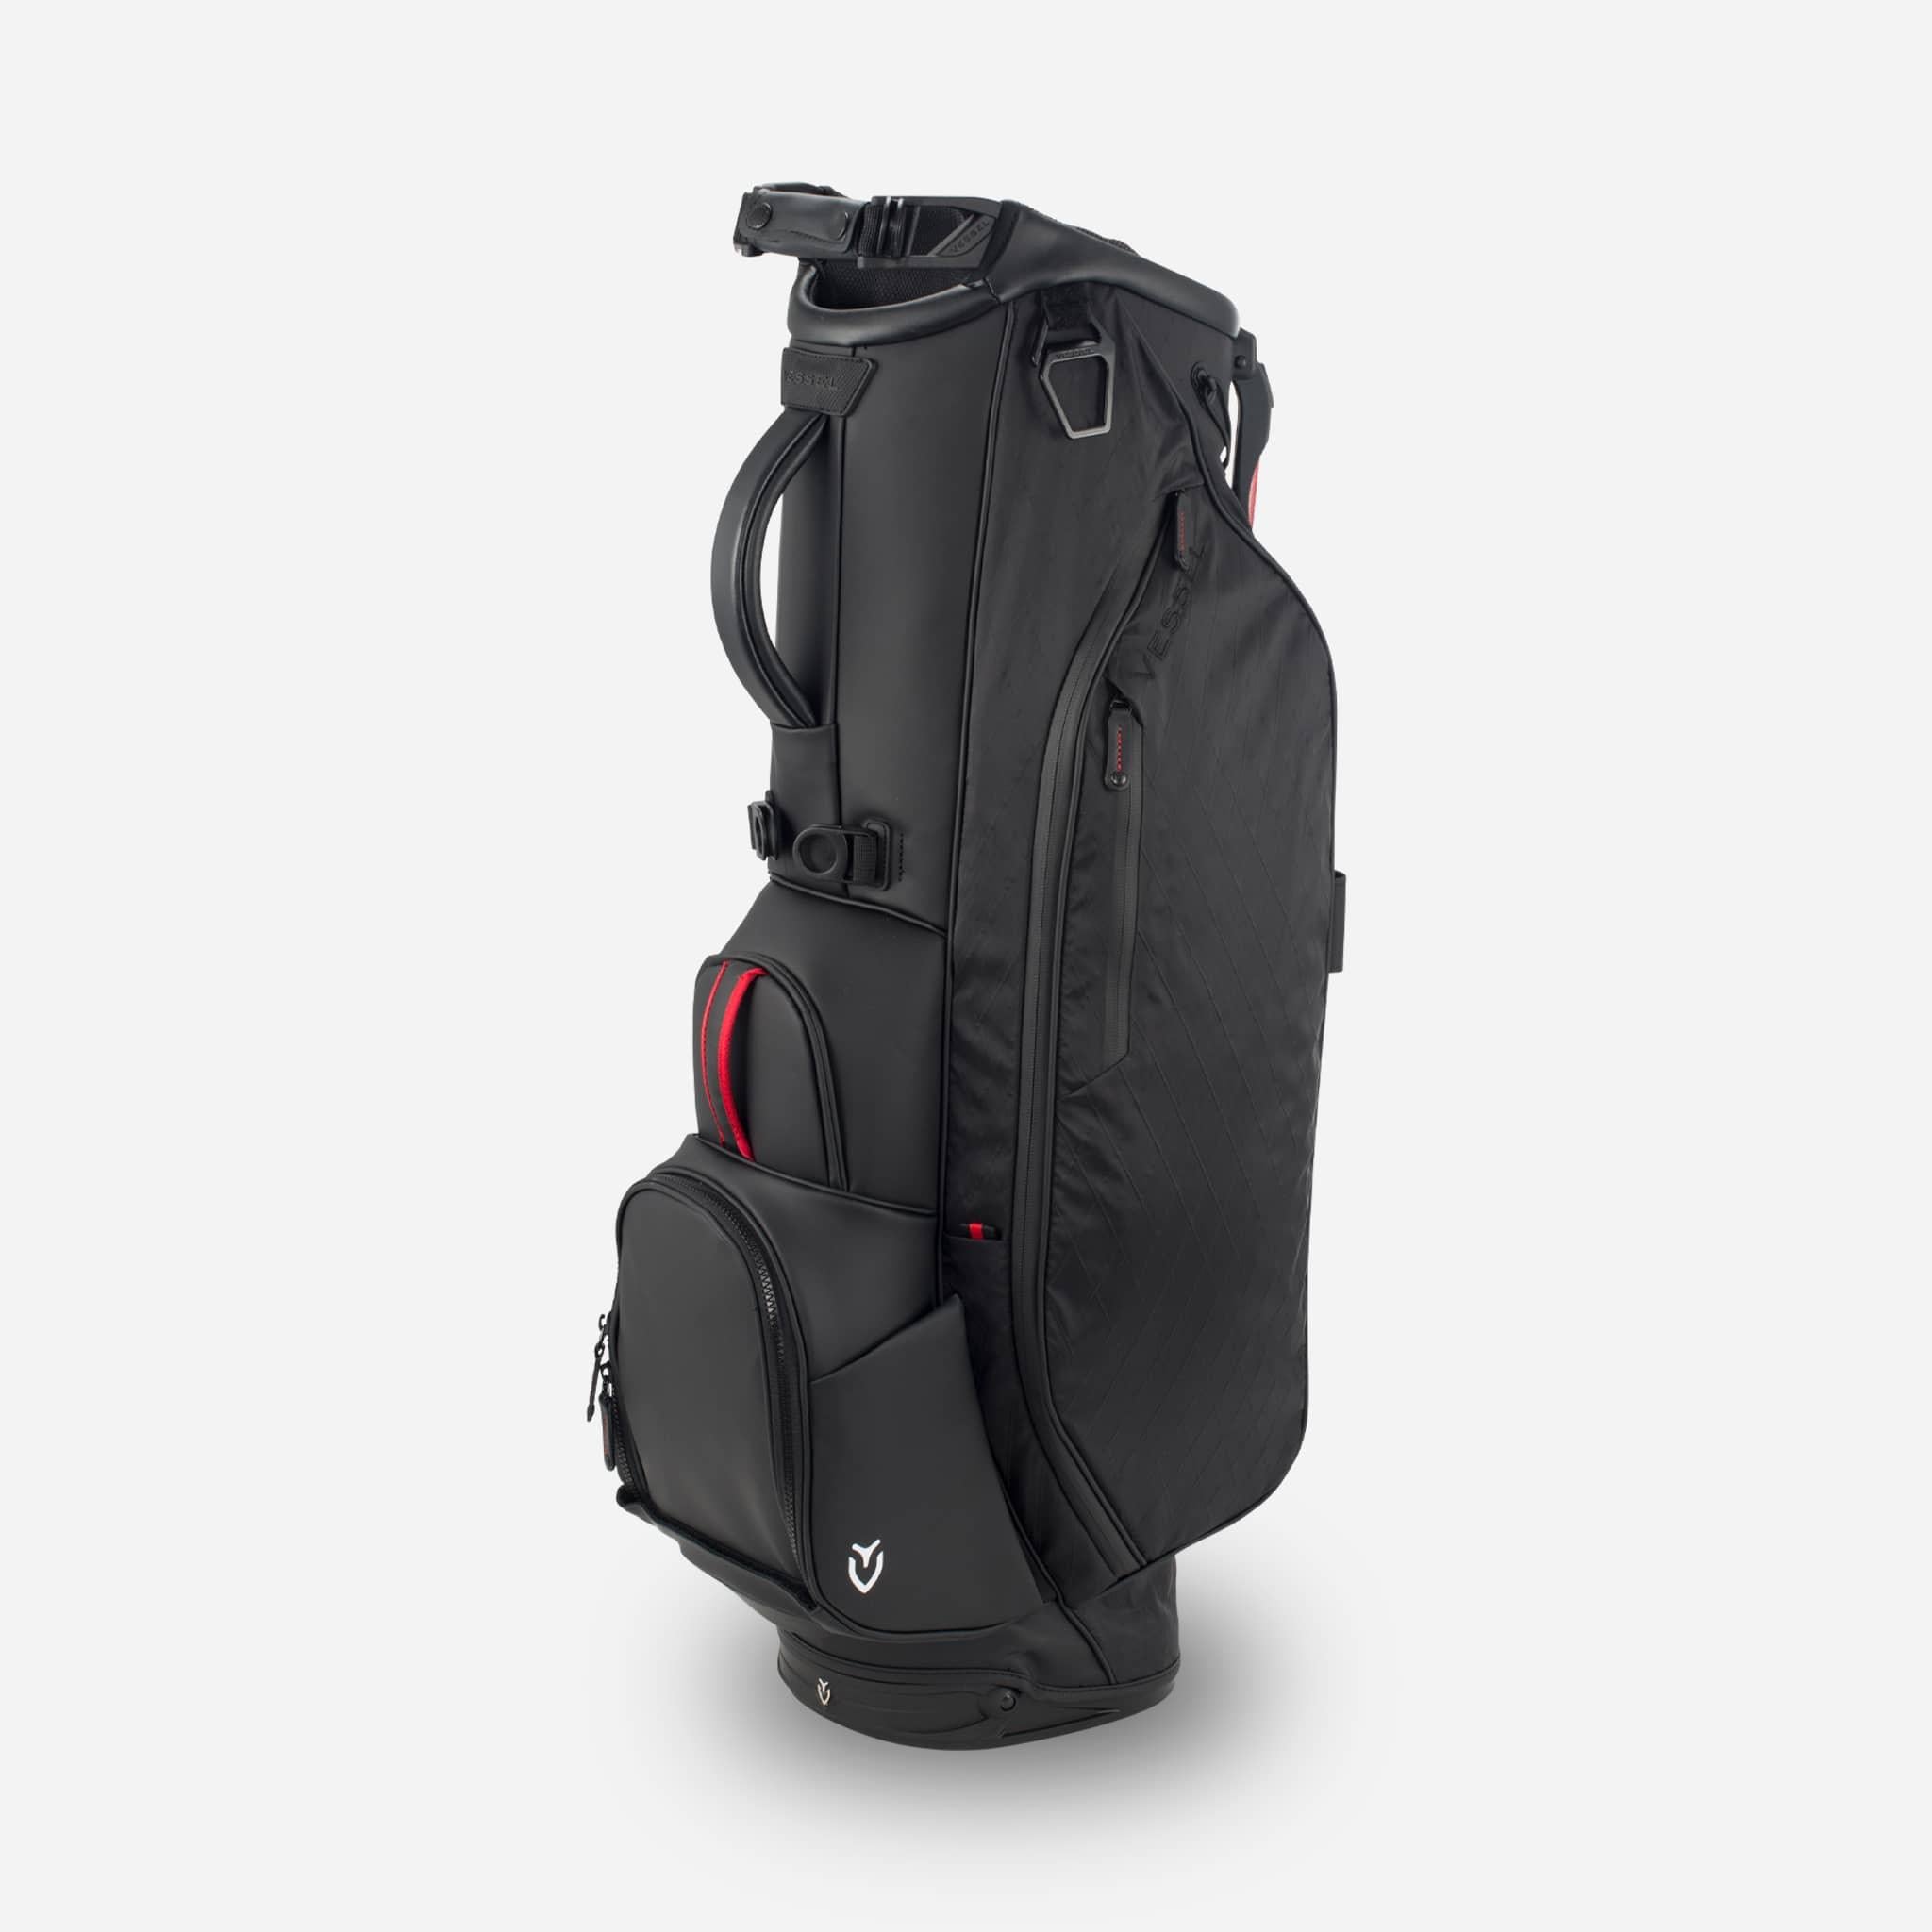 Vessel Golf Bag Rare Citrine Colorway Player 3 stand bag! 6 way top